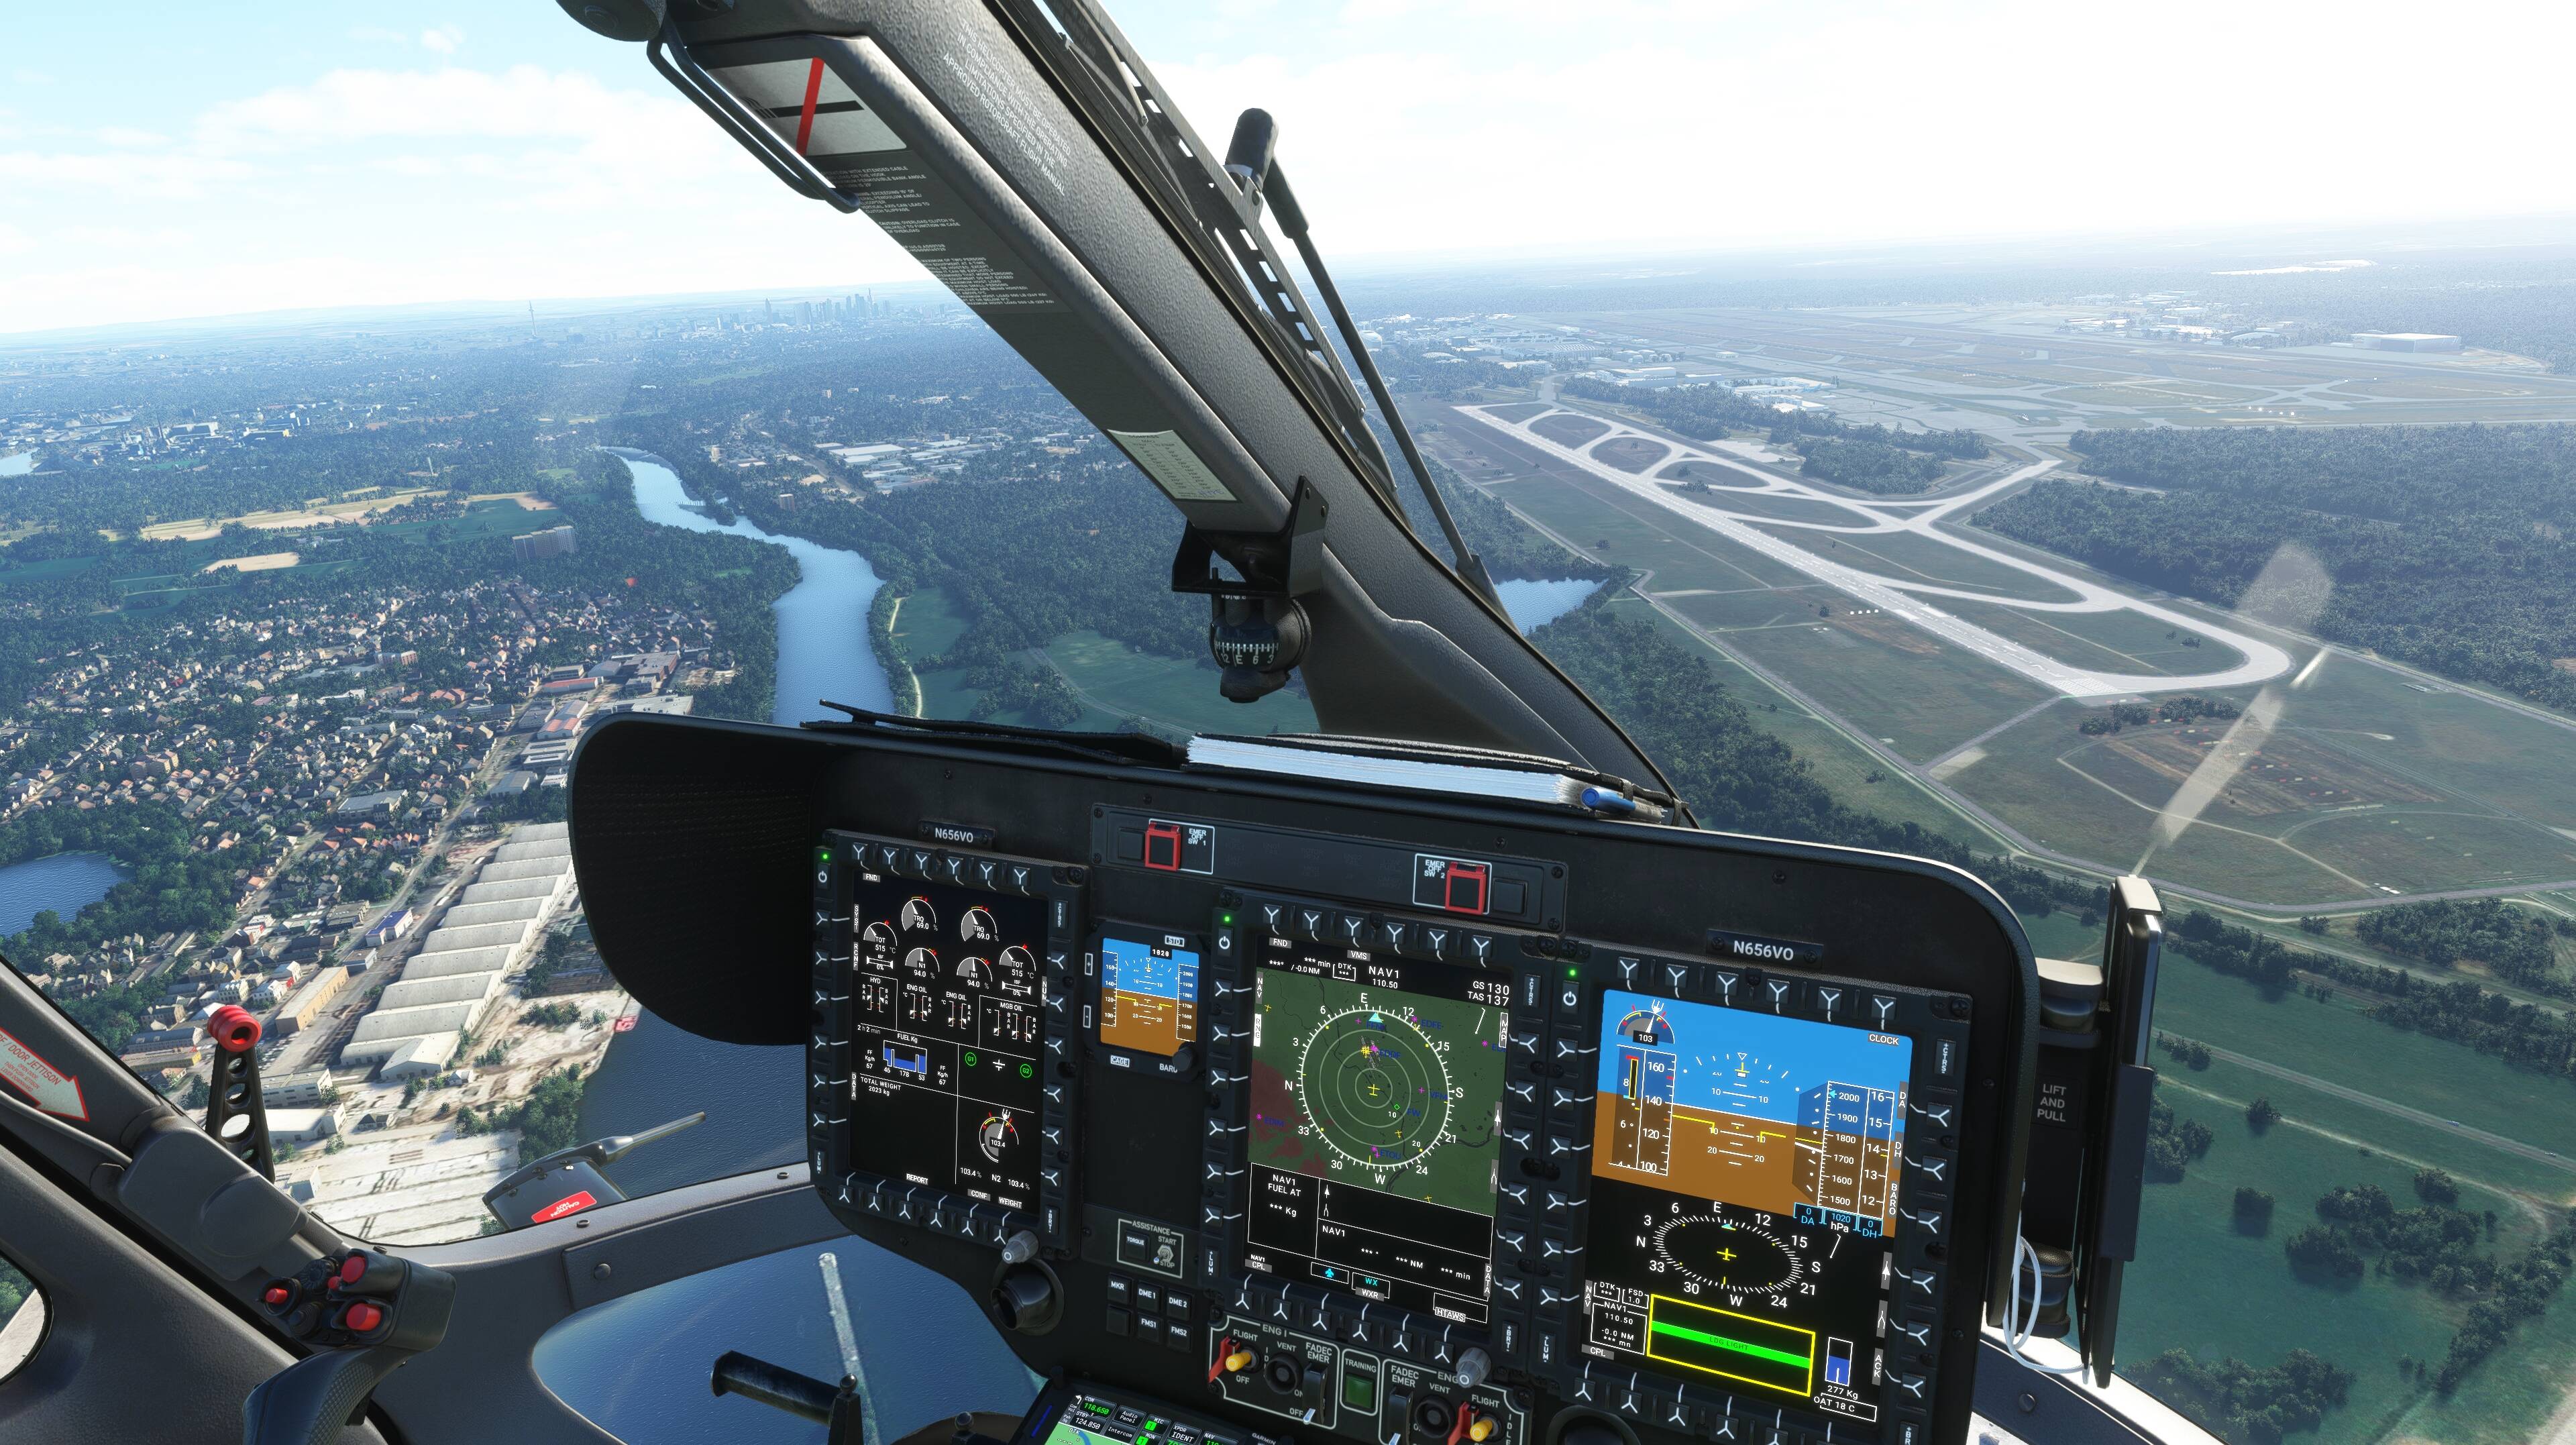 2021-09-08 00_17_23-Microsoft Flight Simulator - 1.19.8.0